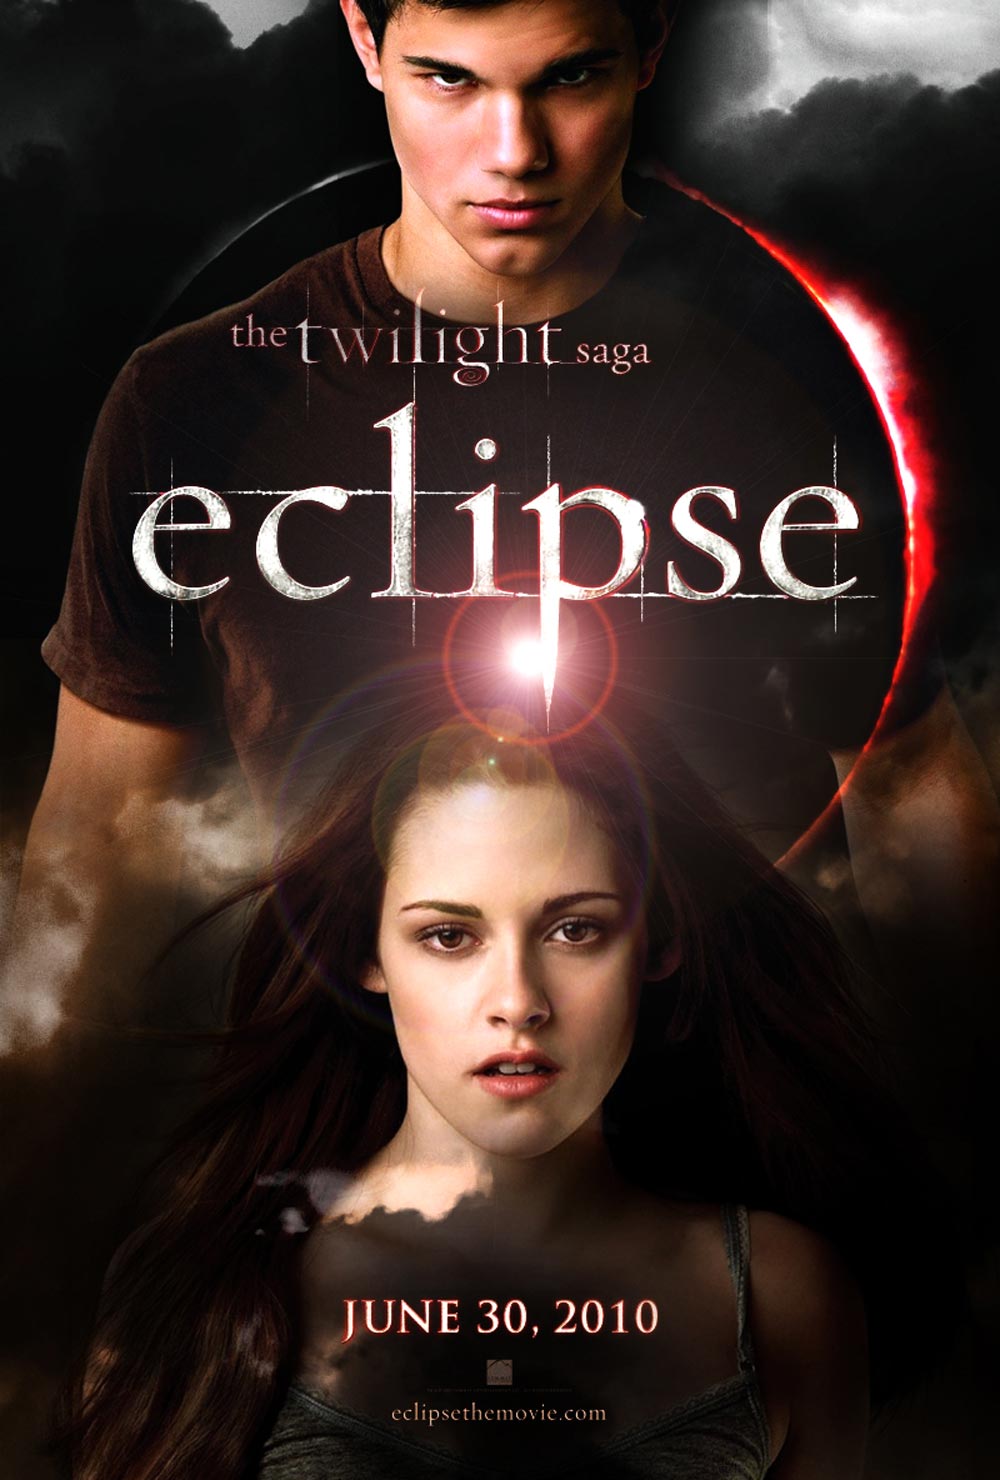 Roger Qbert Reviews "The Twilight Saga: Eclipse" | Review ...